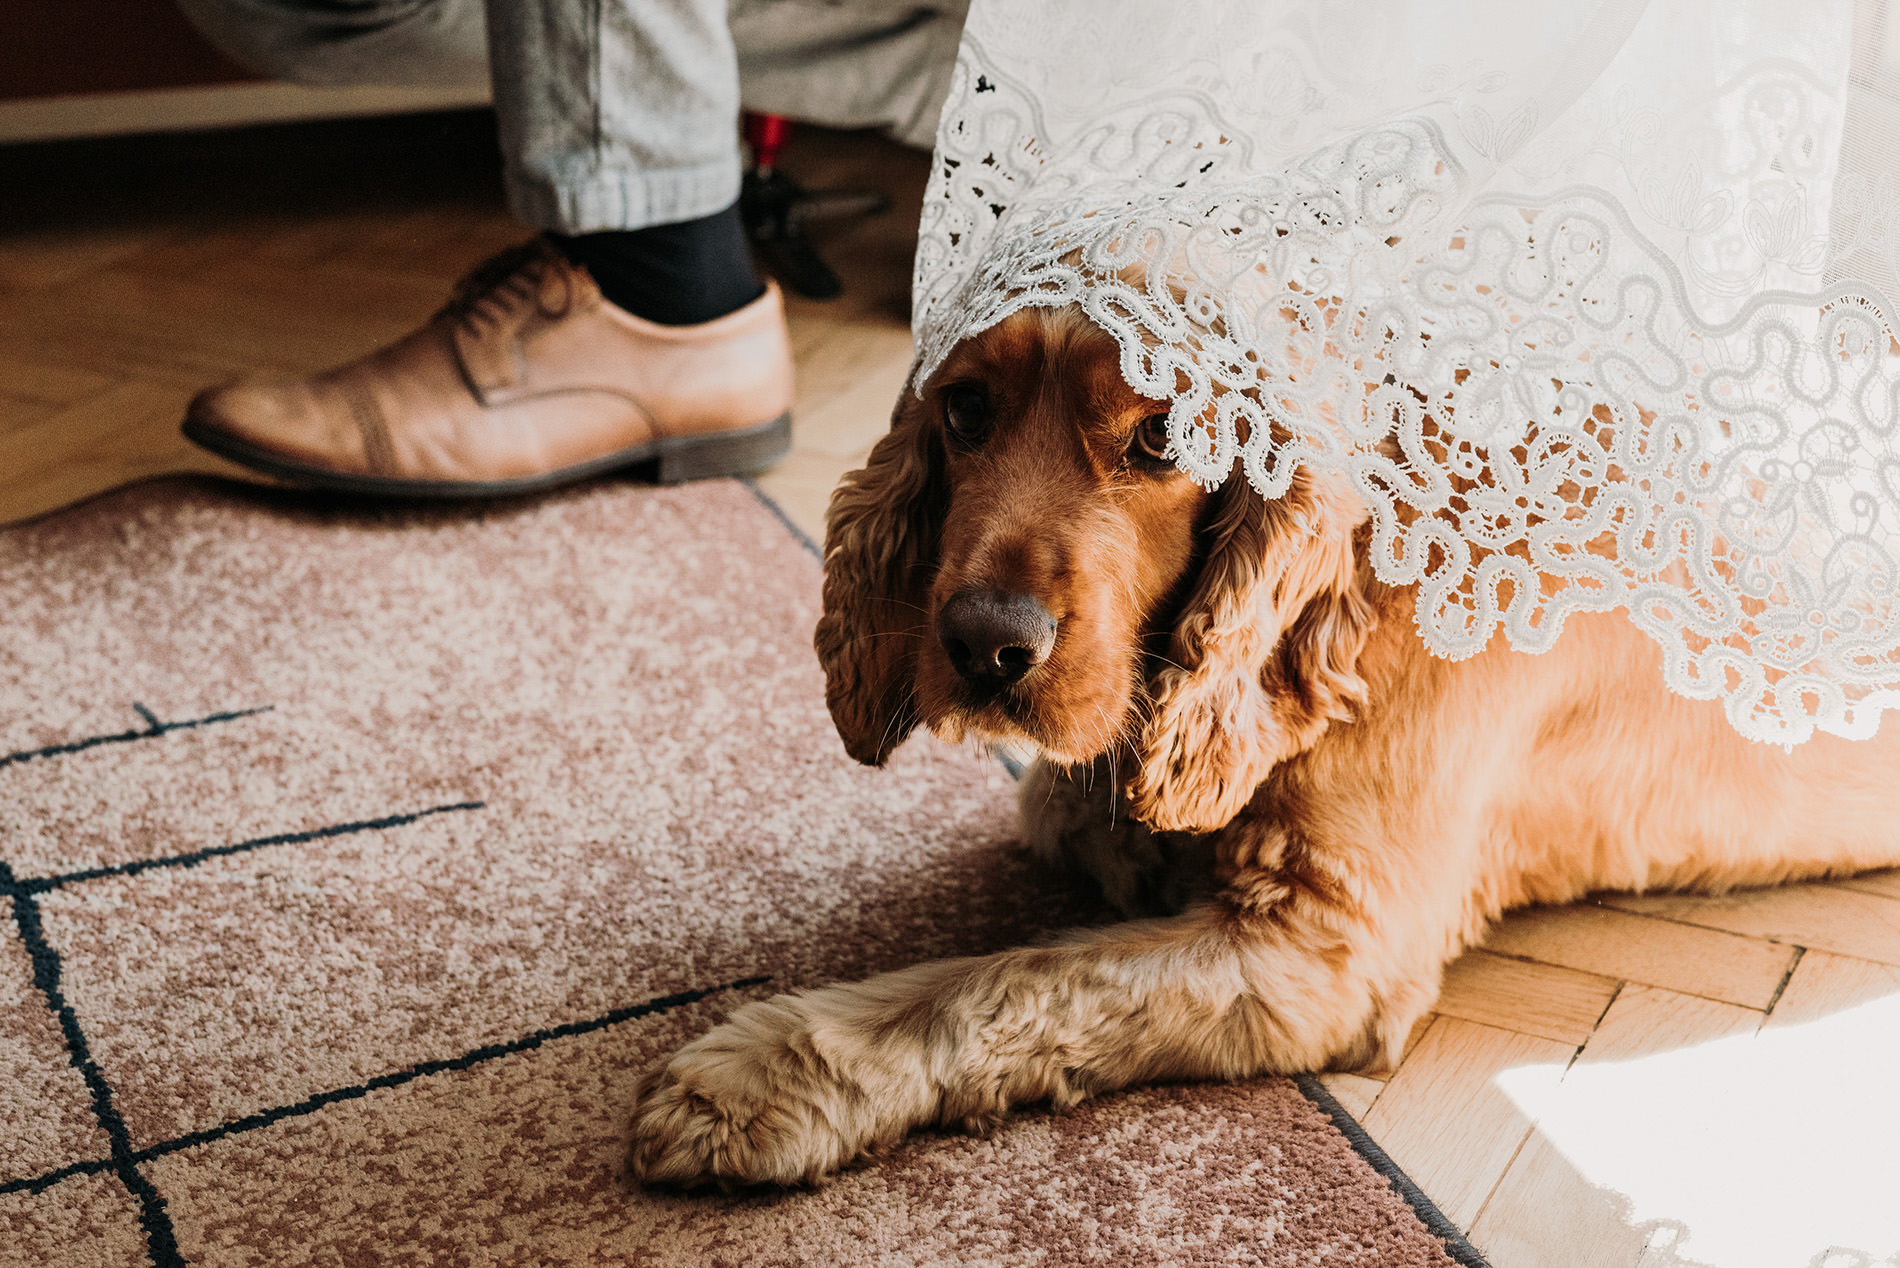 dog at the wedding